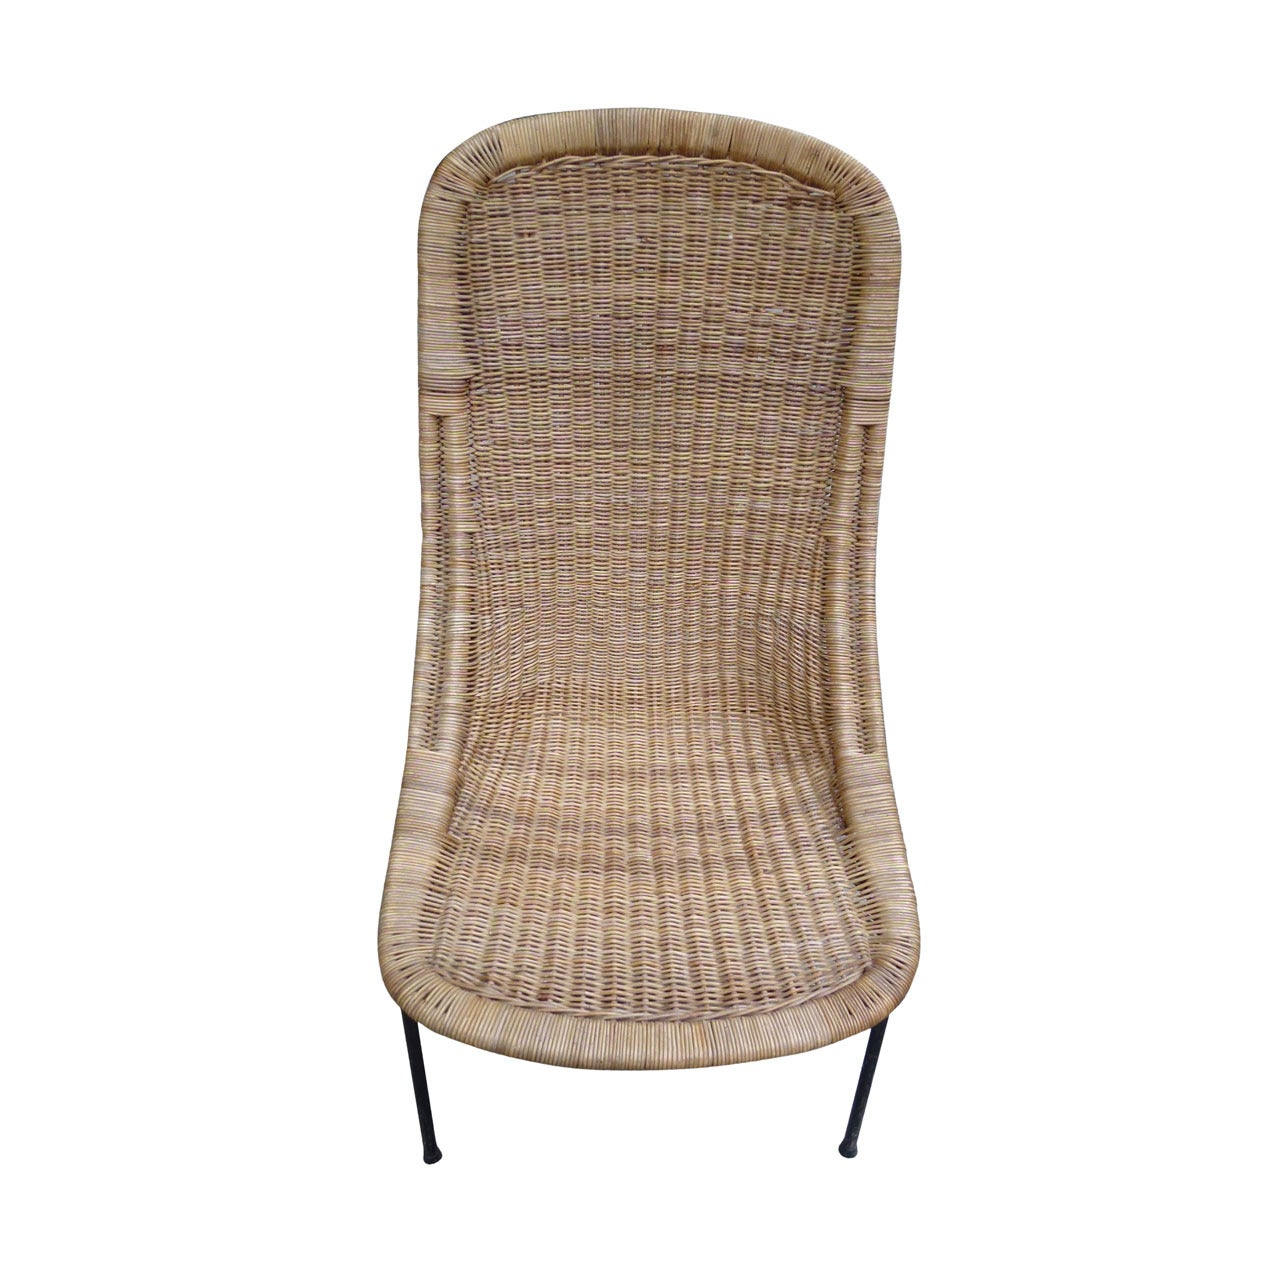 Swedish rattan Chair by Kerstin Hörlin-Holmqvist For Sale